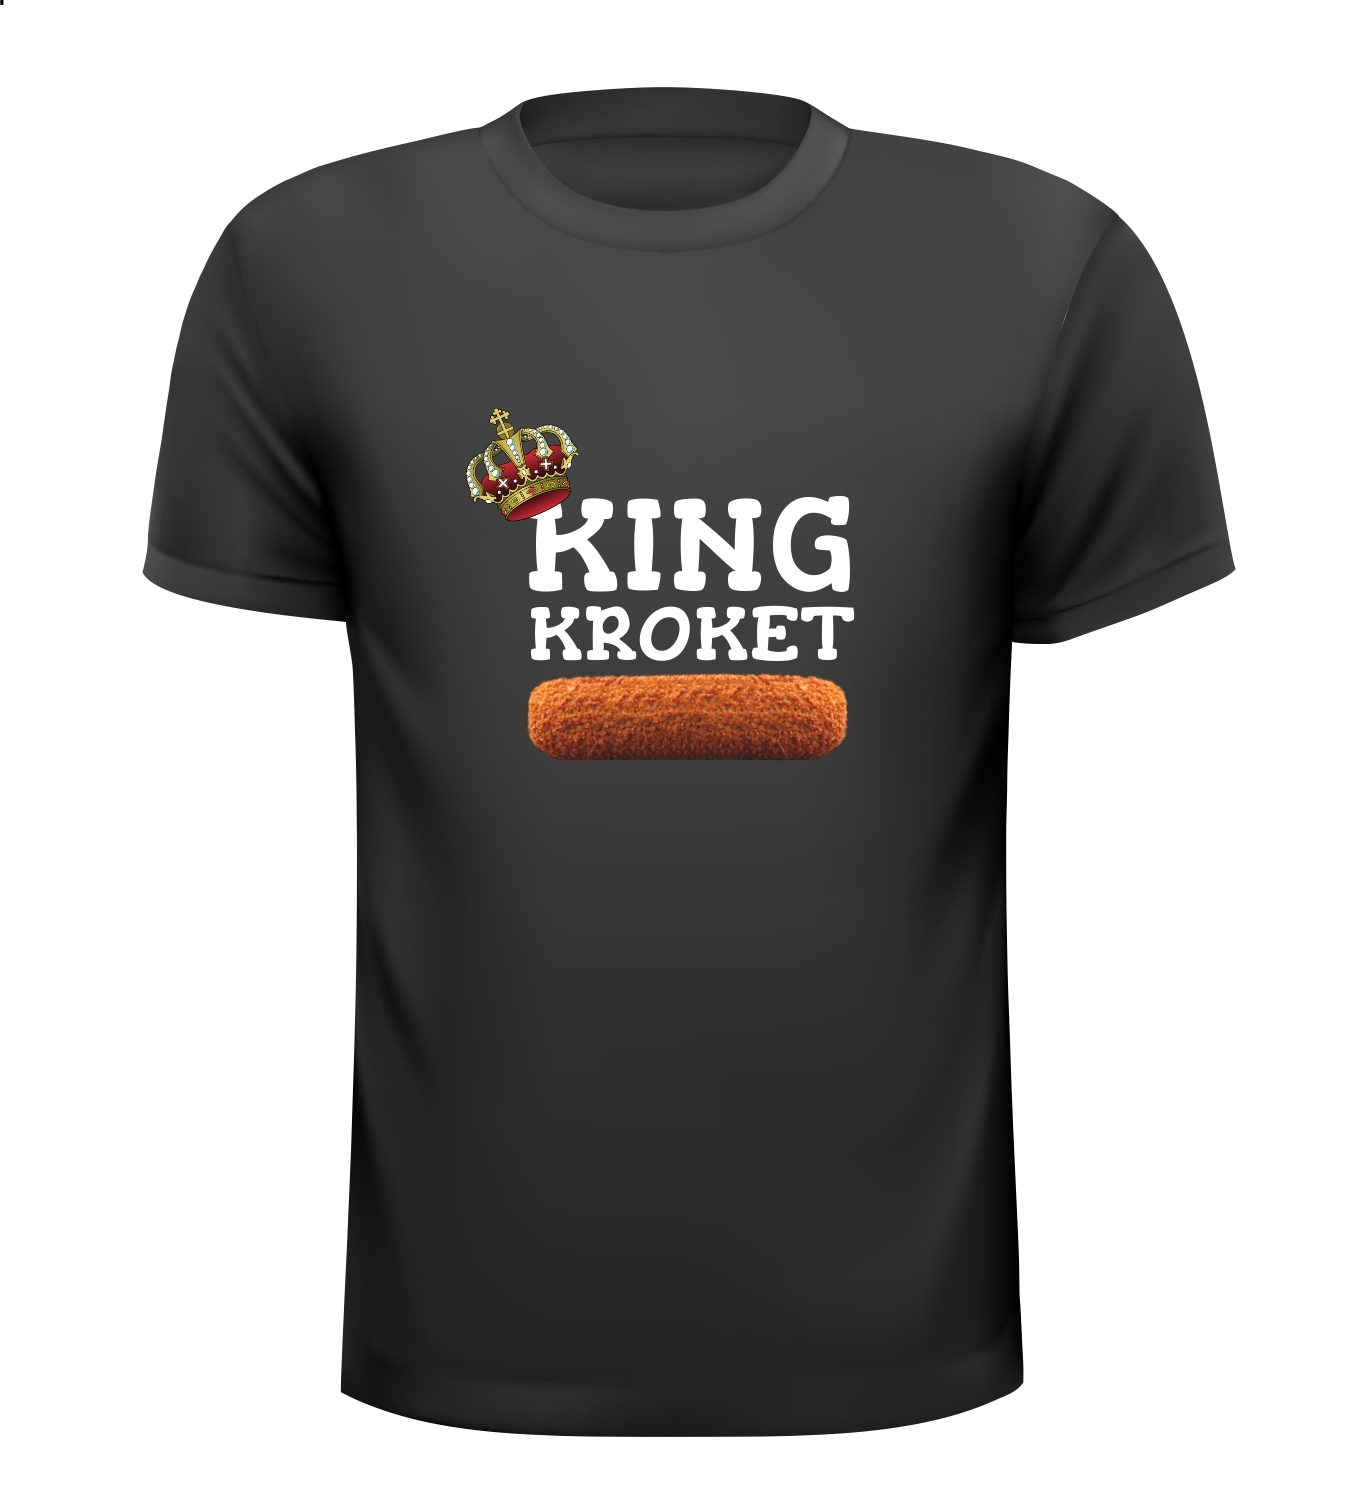 Shirtje King kroket. Kroketten T-shirt